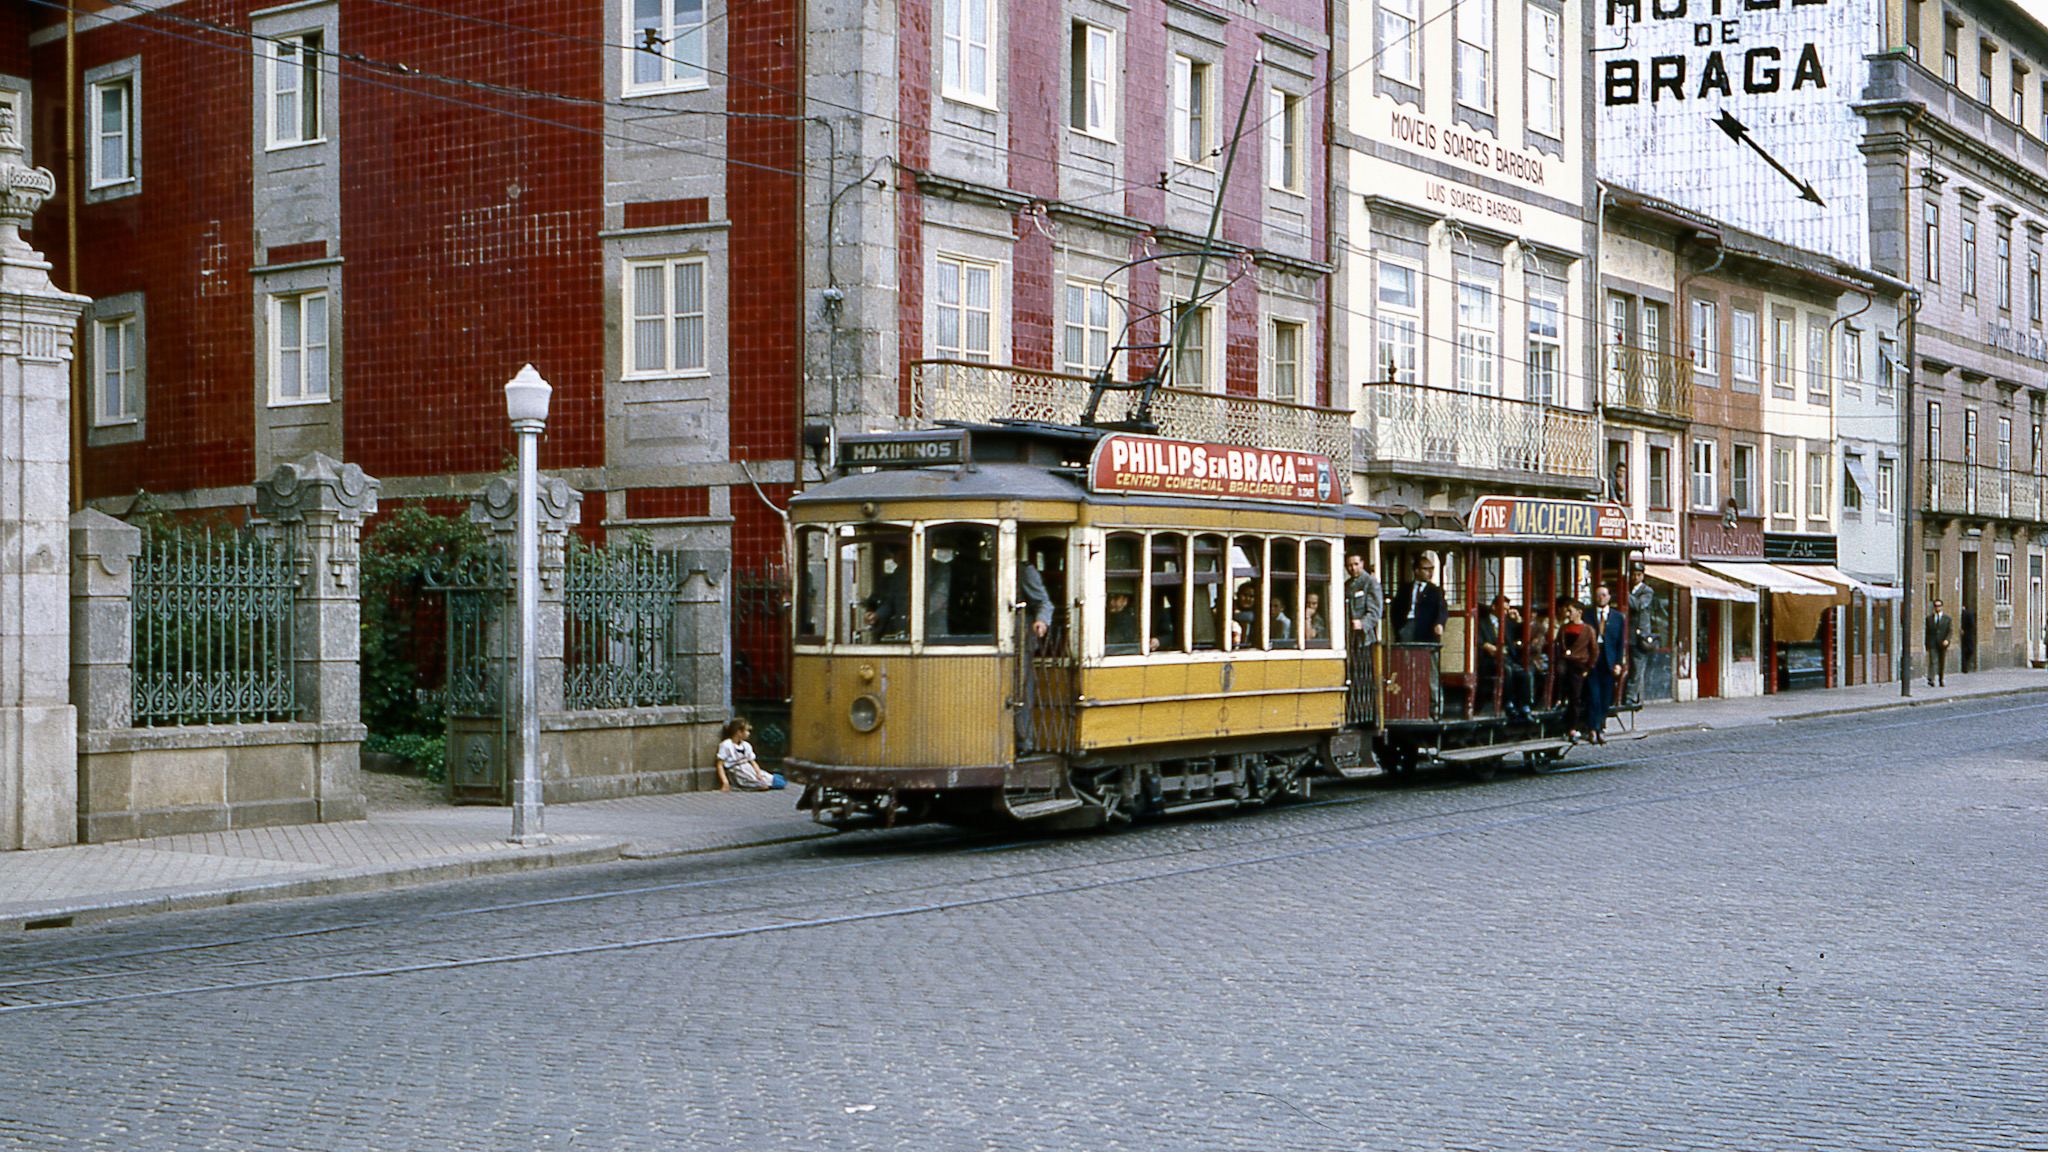 Braga tram no.4 with trailer no.4